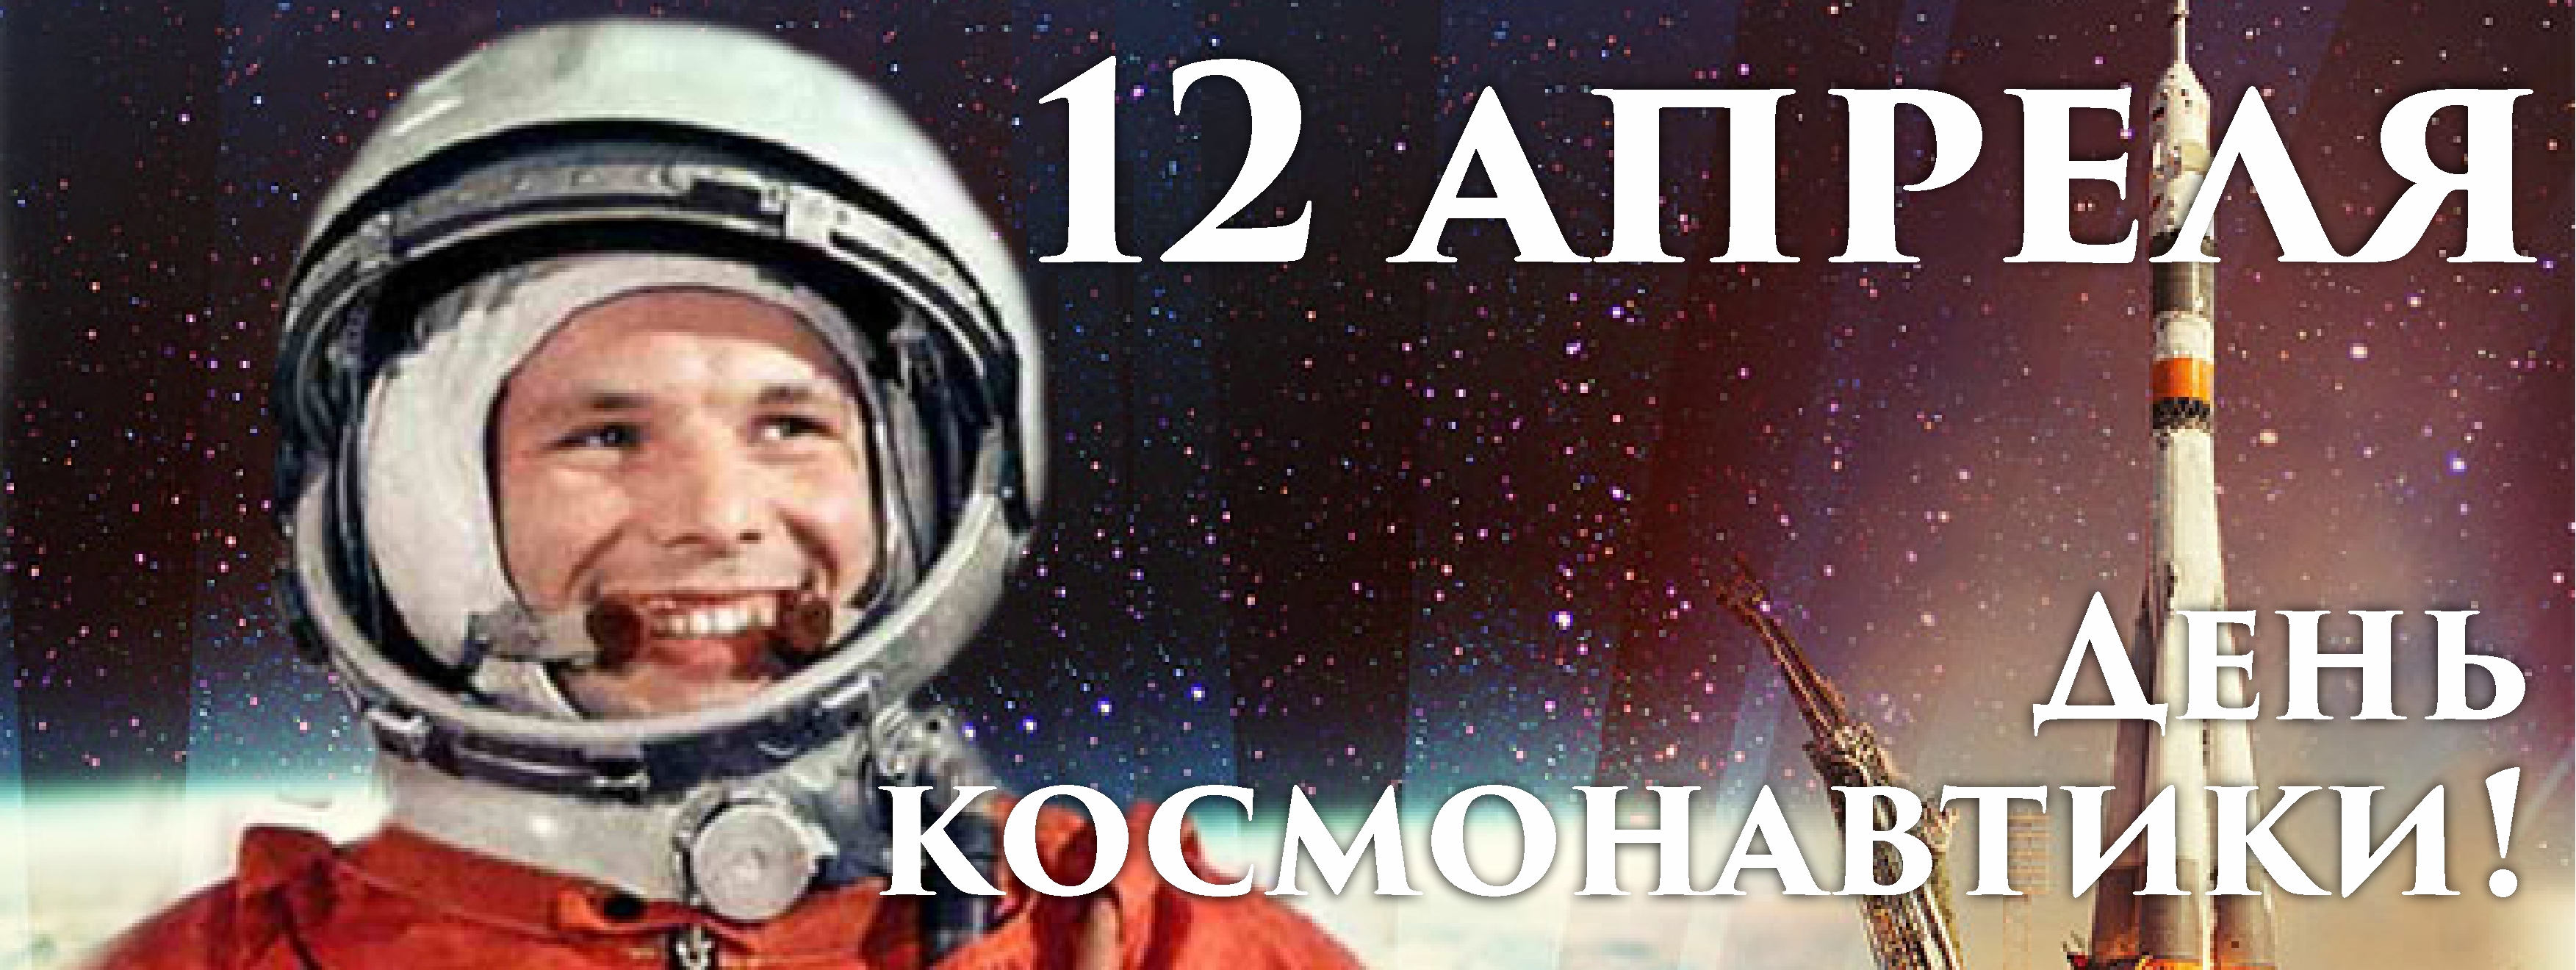 12 апреля сайт. День космонавтики. 12 Апреля день космонавтики. День Космонавта. День космонавтики картинки.